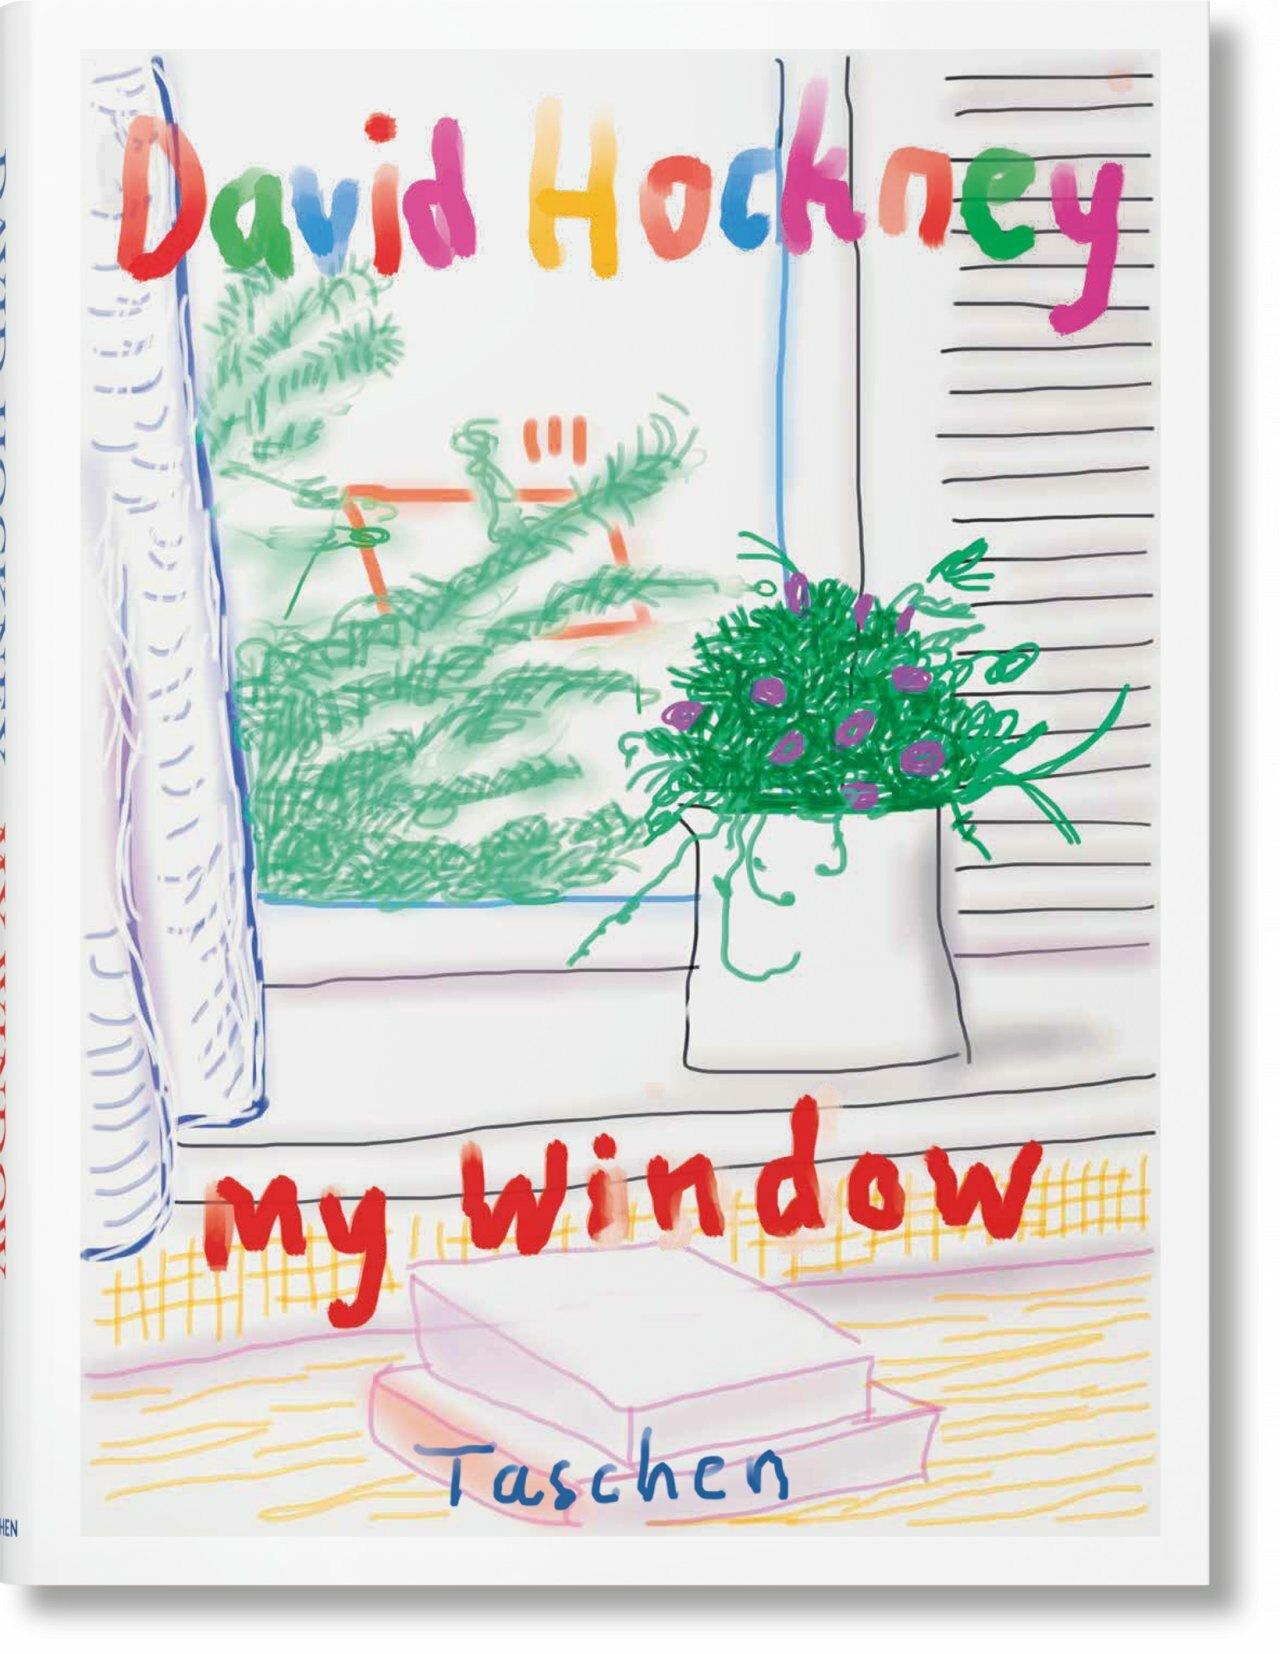 DAVID HOCKNEY. MY WINDOW. 